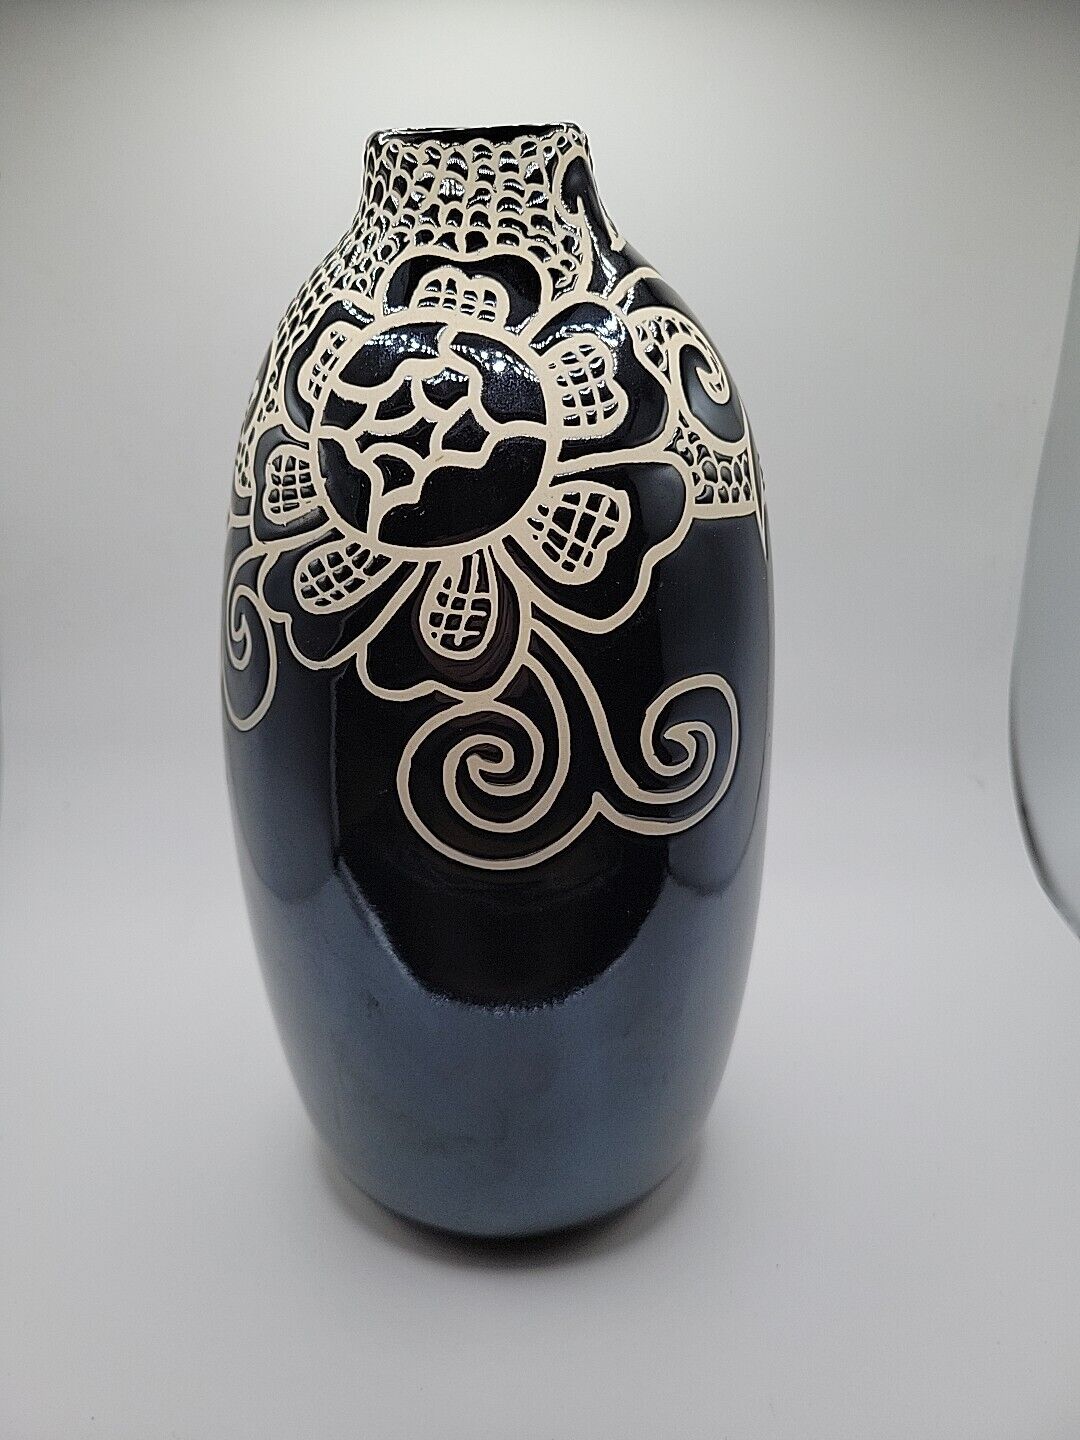 thailand vase Black With White Floral Design